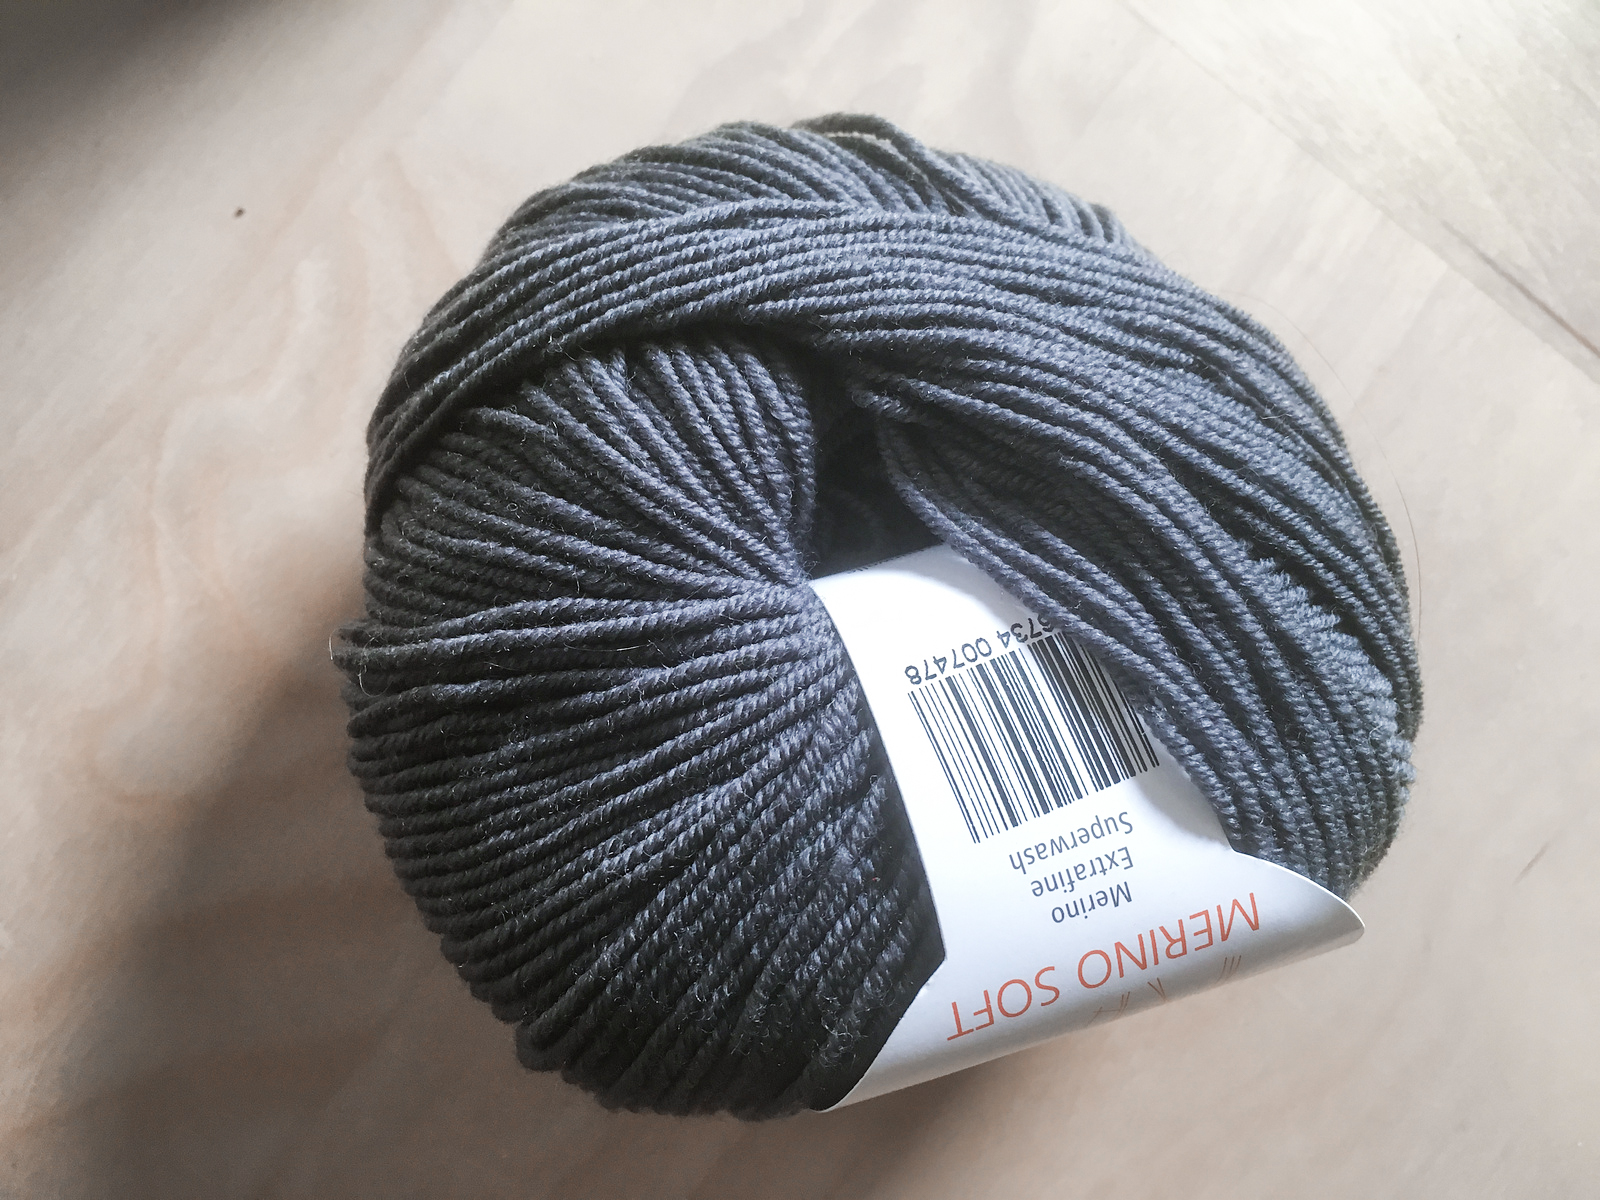 Knitting From Stash: How to design shawl knitting patterns based on yarn